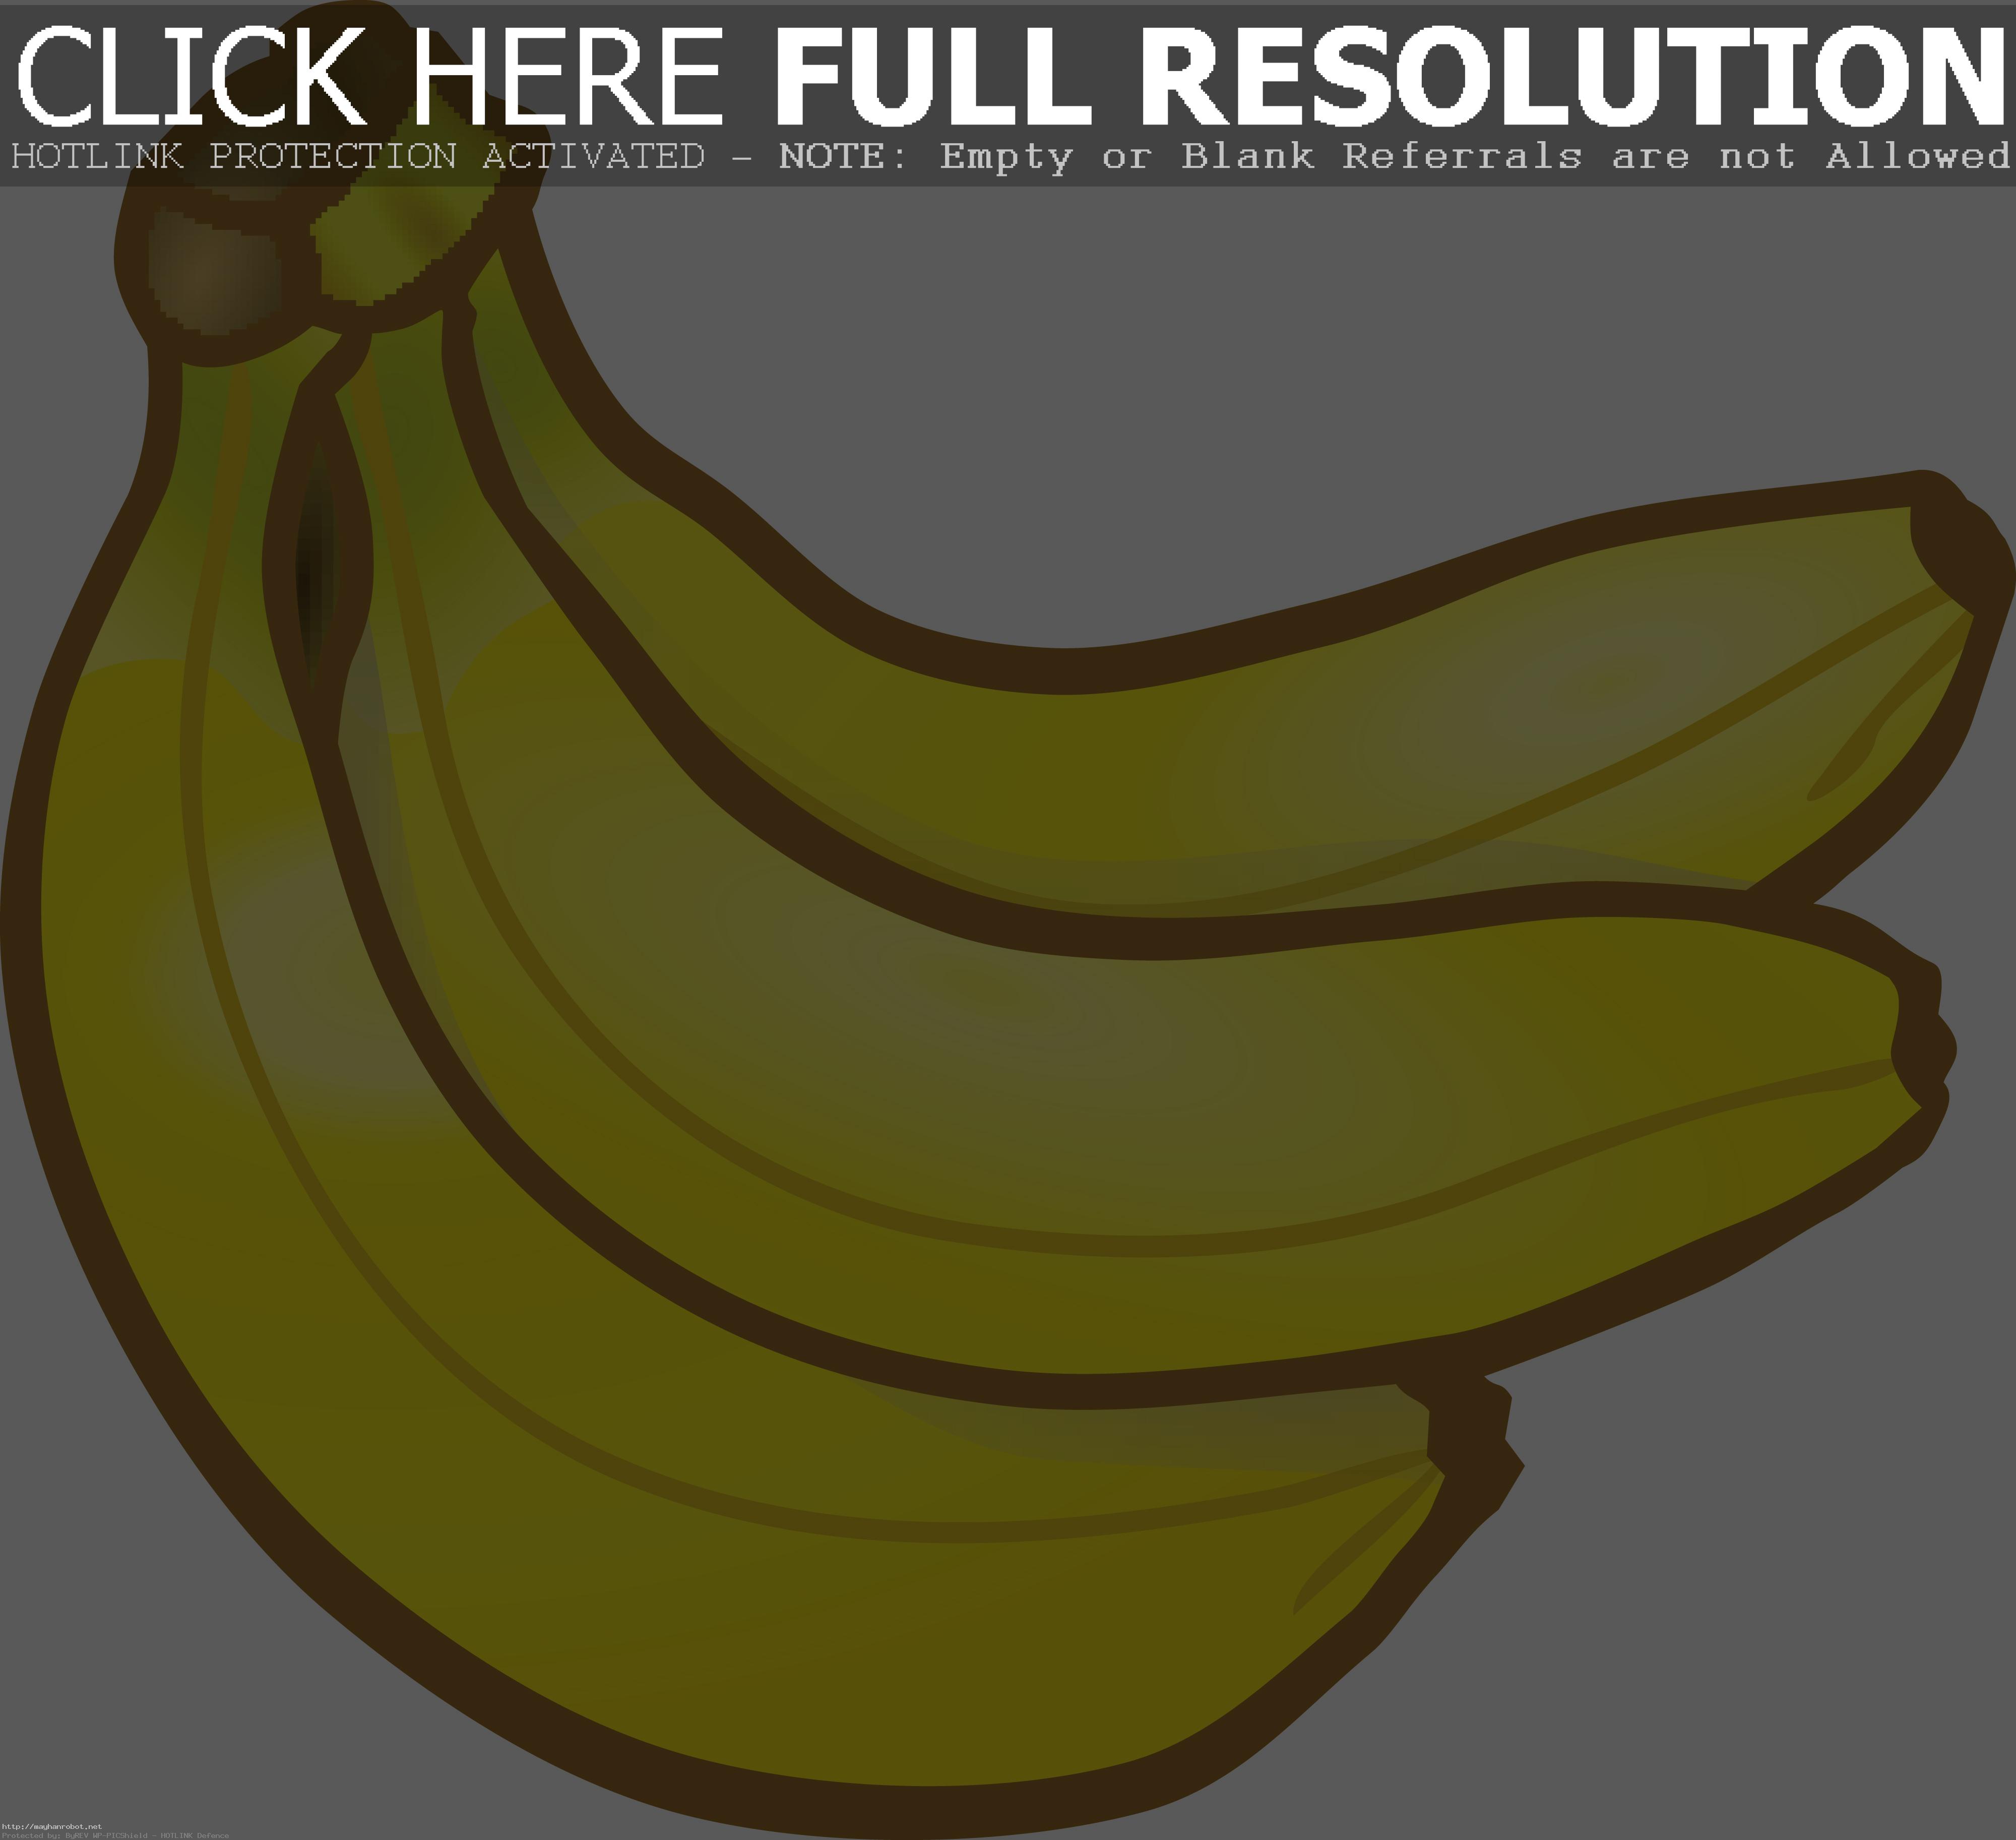 1636 Free Clipart Of A Banana Clip Art